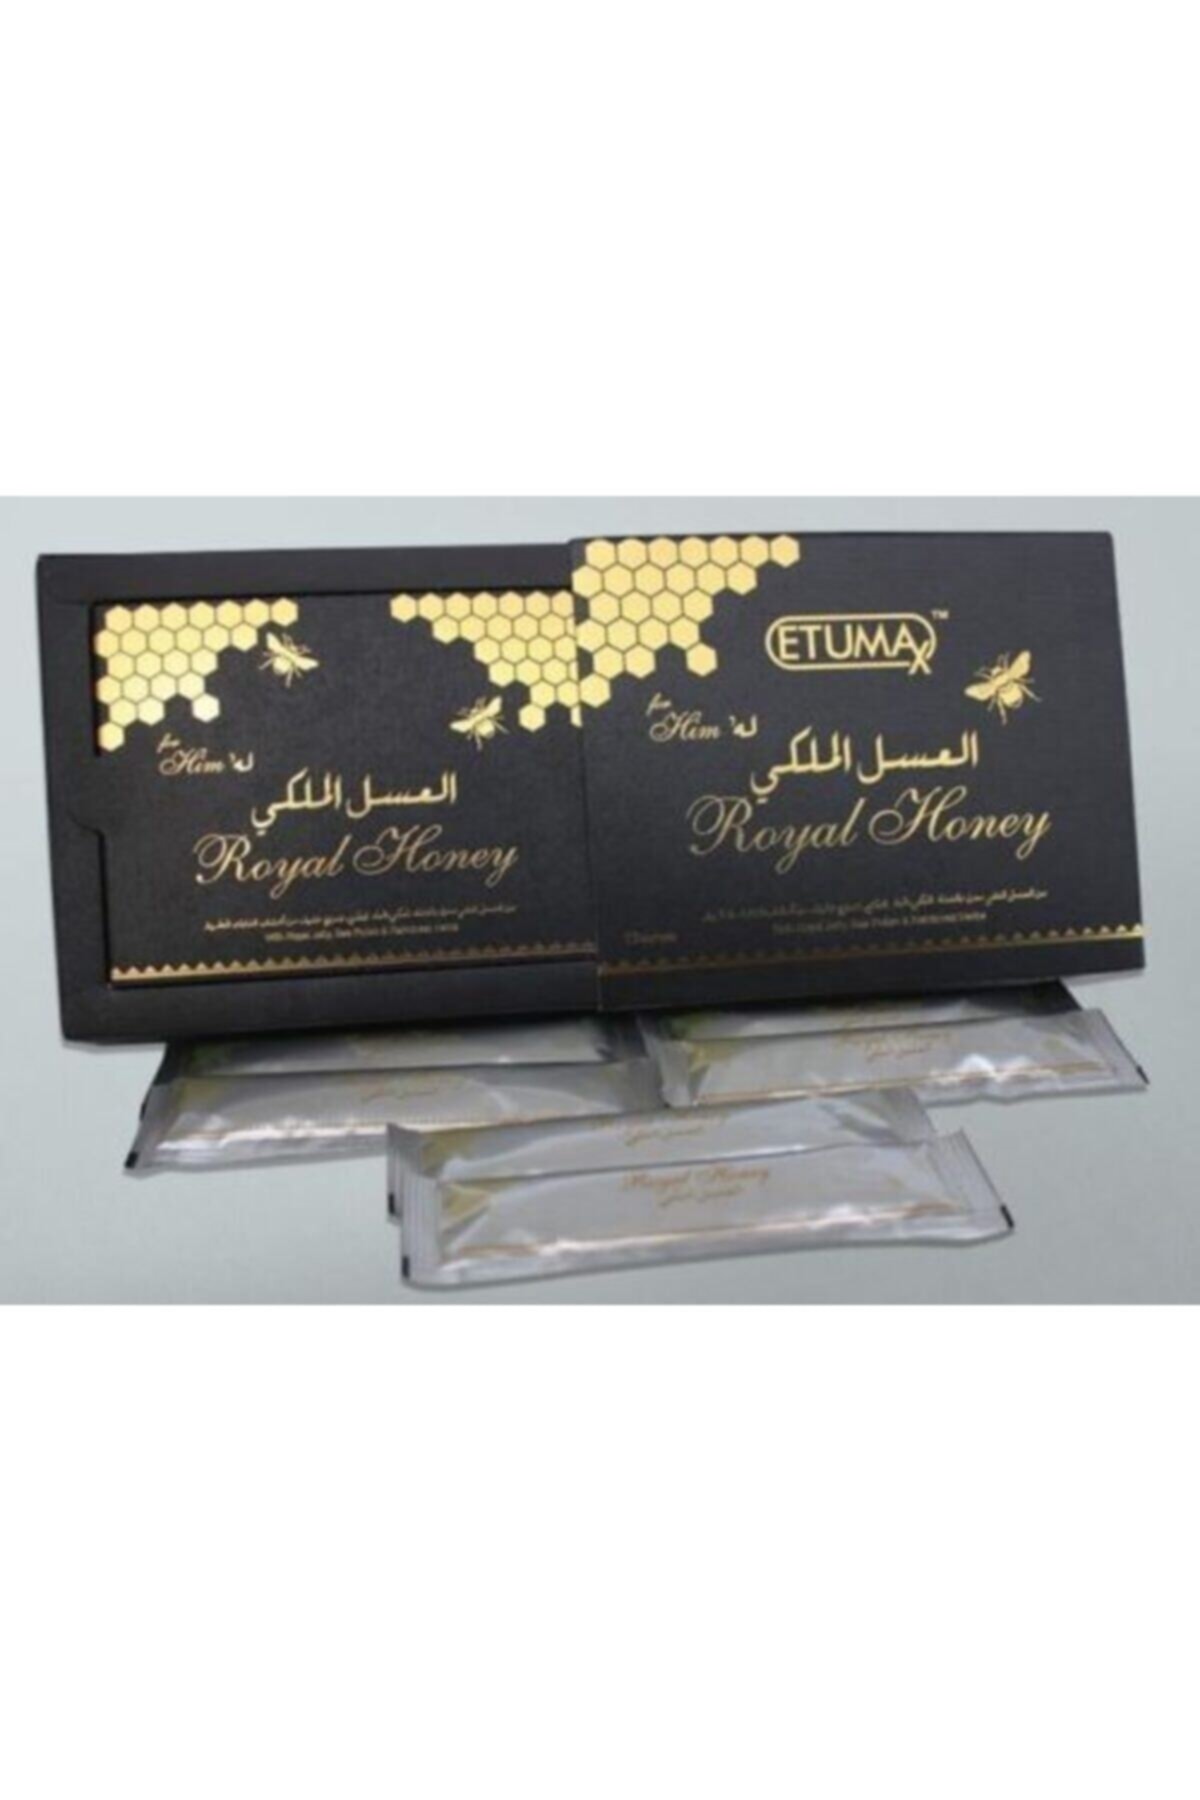 Wonderful Honey Royal Honey Etumax 12x20g Performans Bitkisel Bal